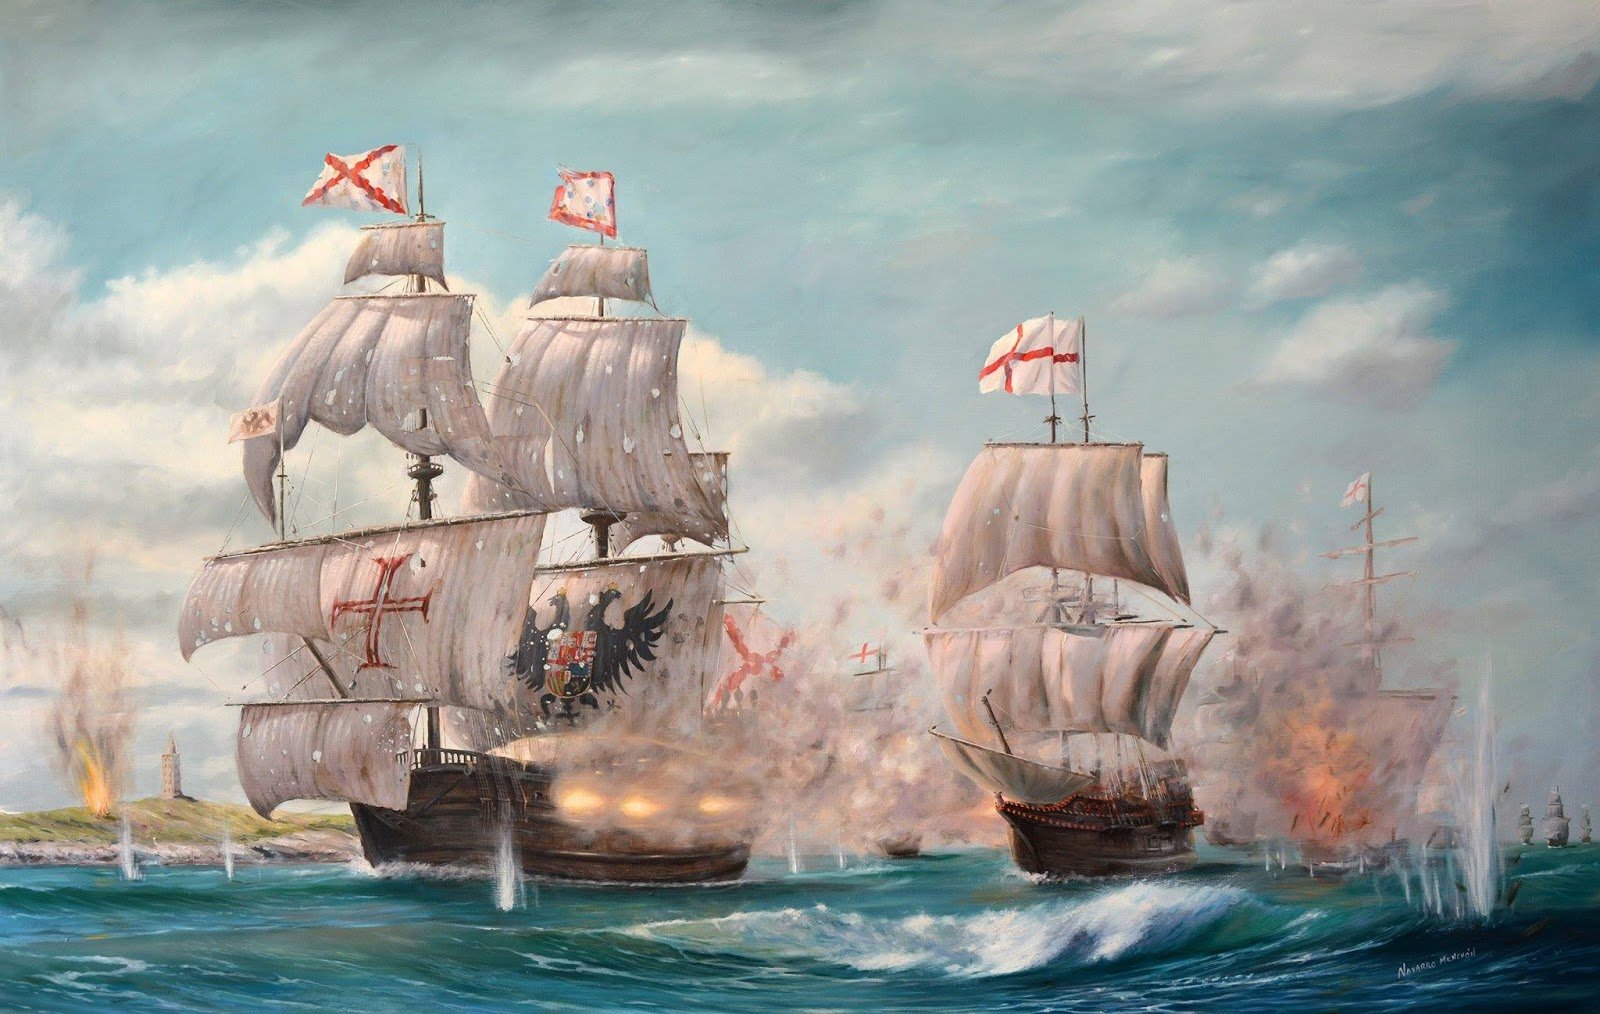 Кто разгромил непобедимую армаду. Фрэнсис Дрейк и непобедимая Армада. Испанская непобедимая Армада 1588. Испанская Армада 1588 флот. Испанская Армада 1588 ф\лот.